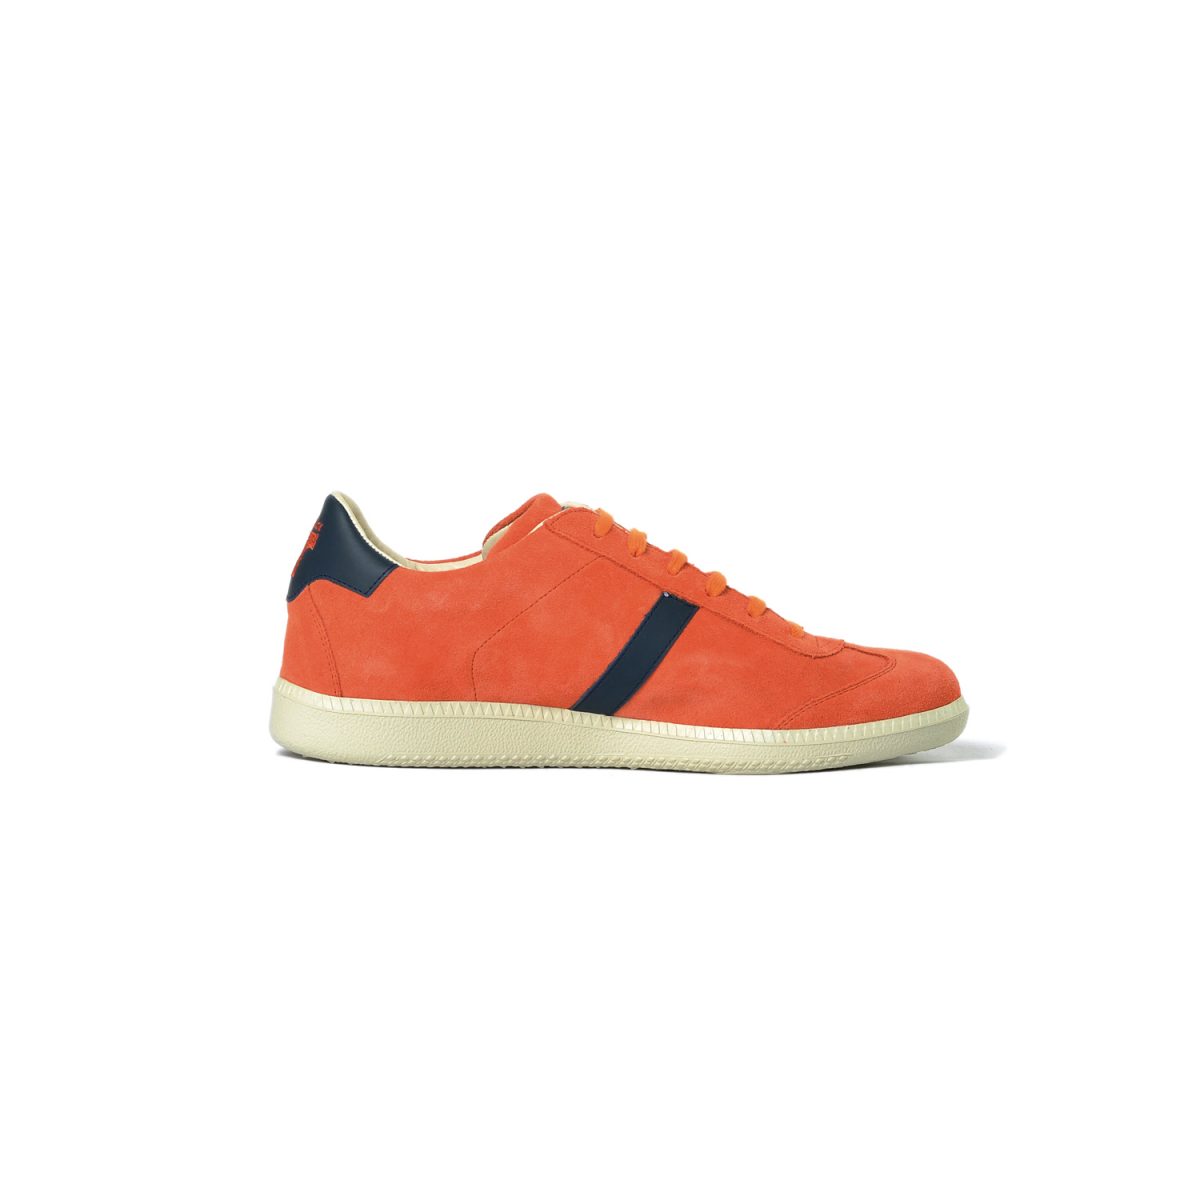 Tisza shoes - Comfort - Orange-blue